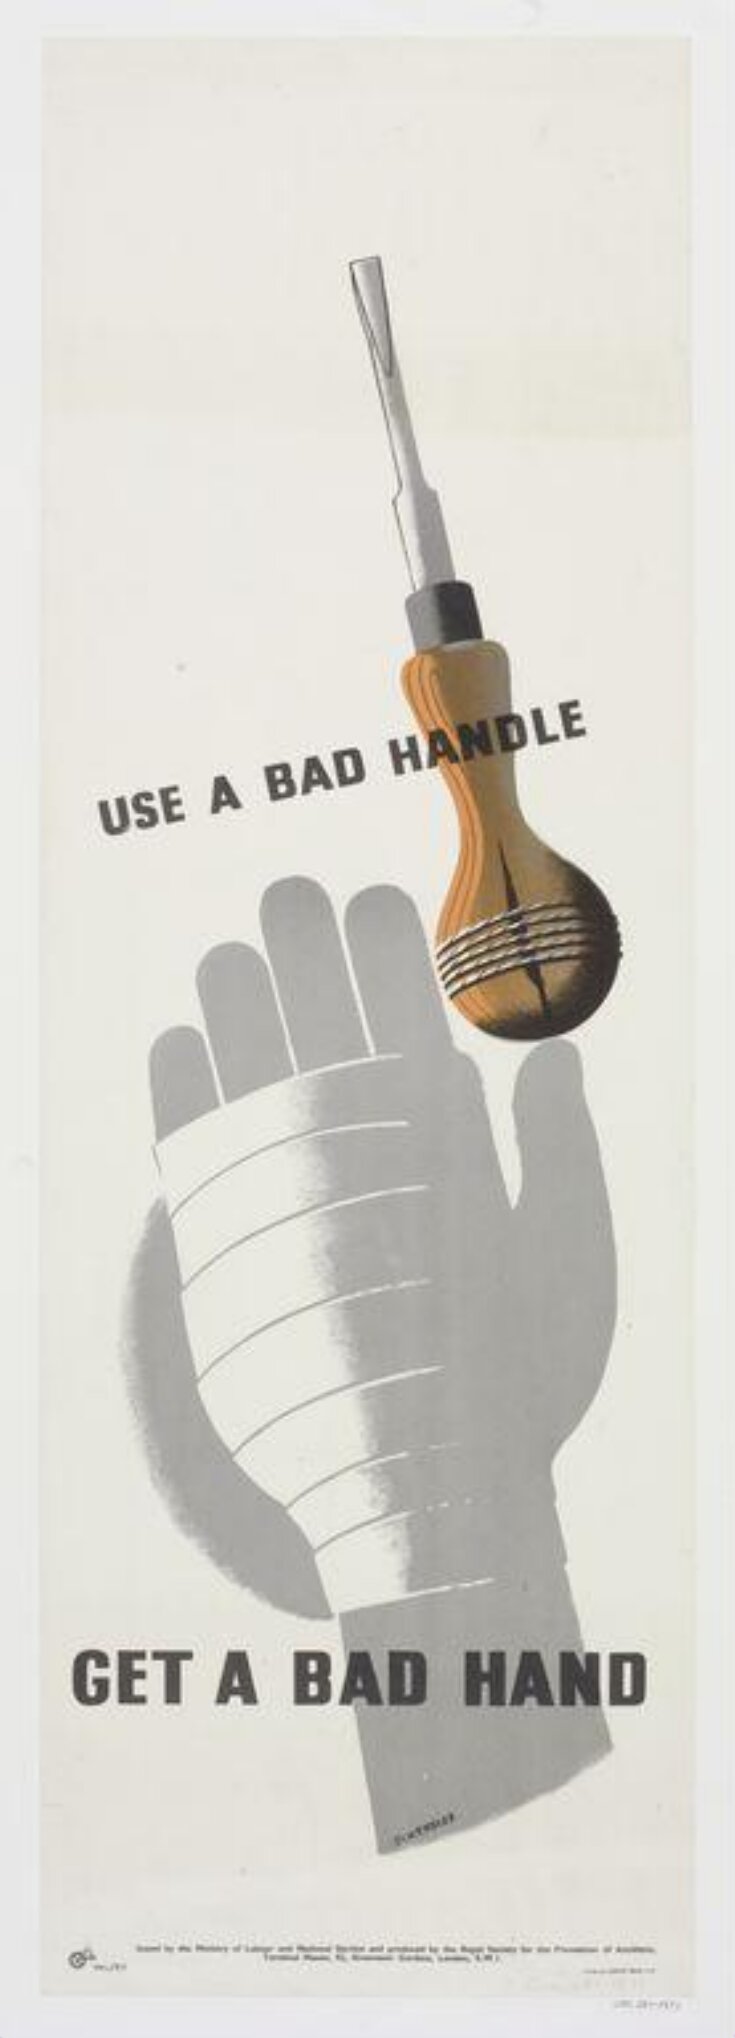 Use A Bad Handle. Get A Bad Hand image